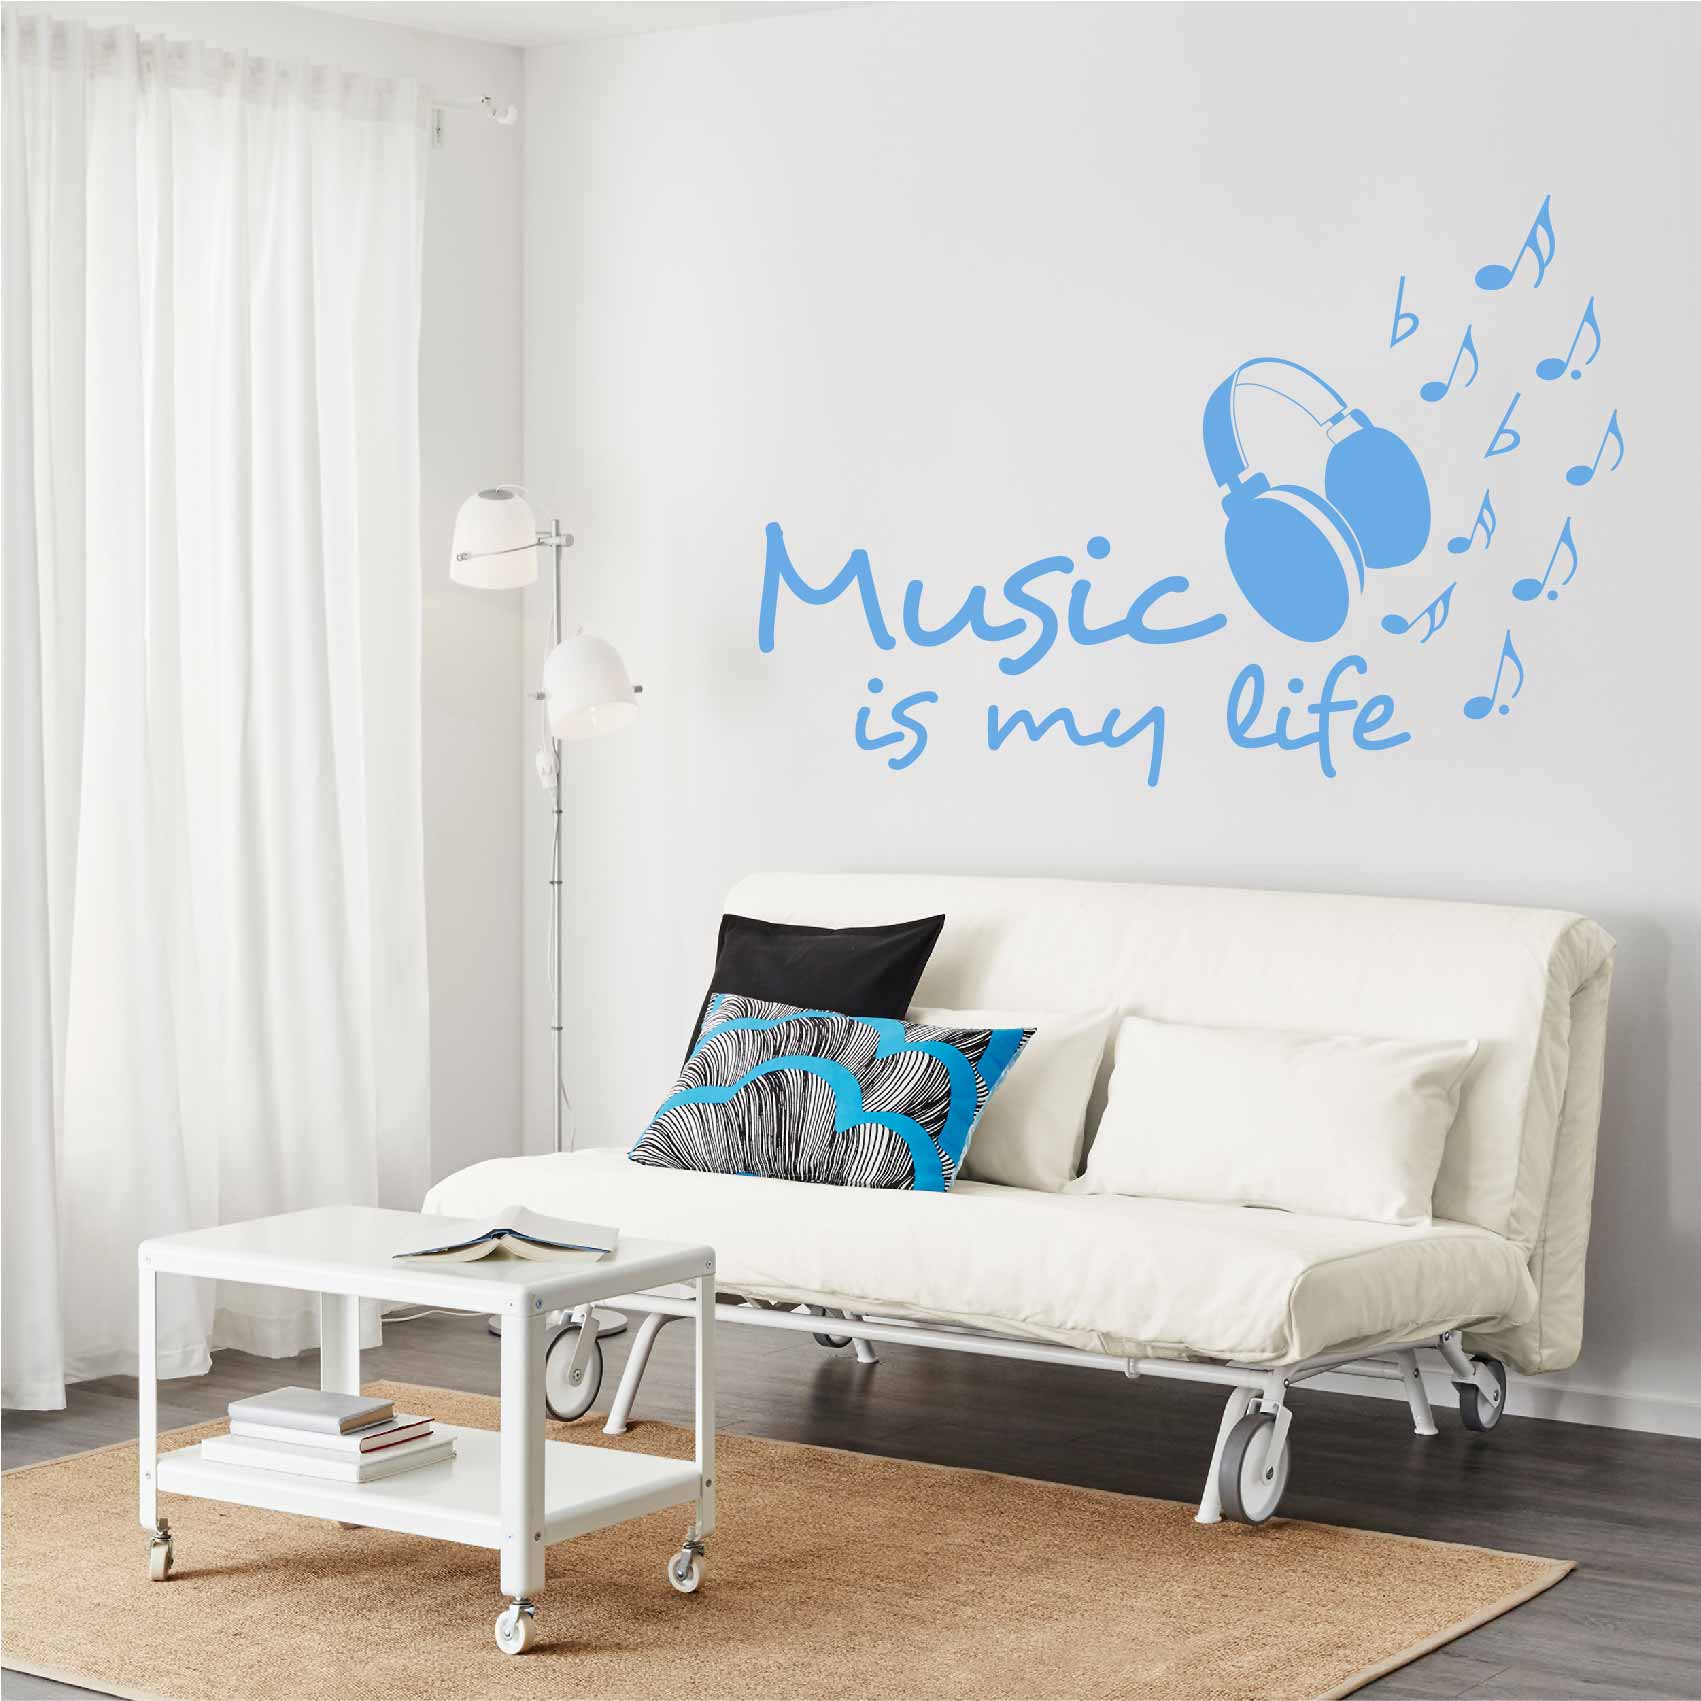 stickers-music-is-my-life-ref17musique-autocollant-muraux-musique-sticker-mural-musical-note-notes-deco-salon-chambre-adulte-ado-enfant